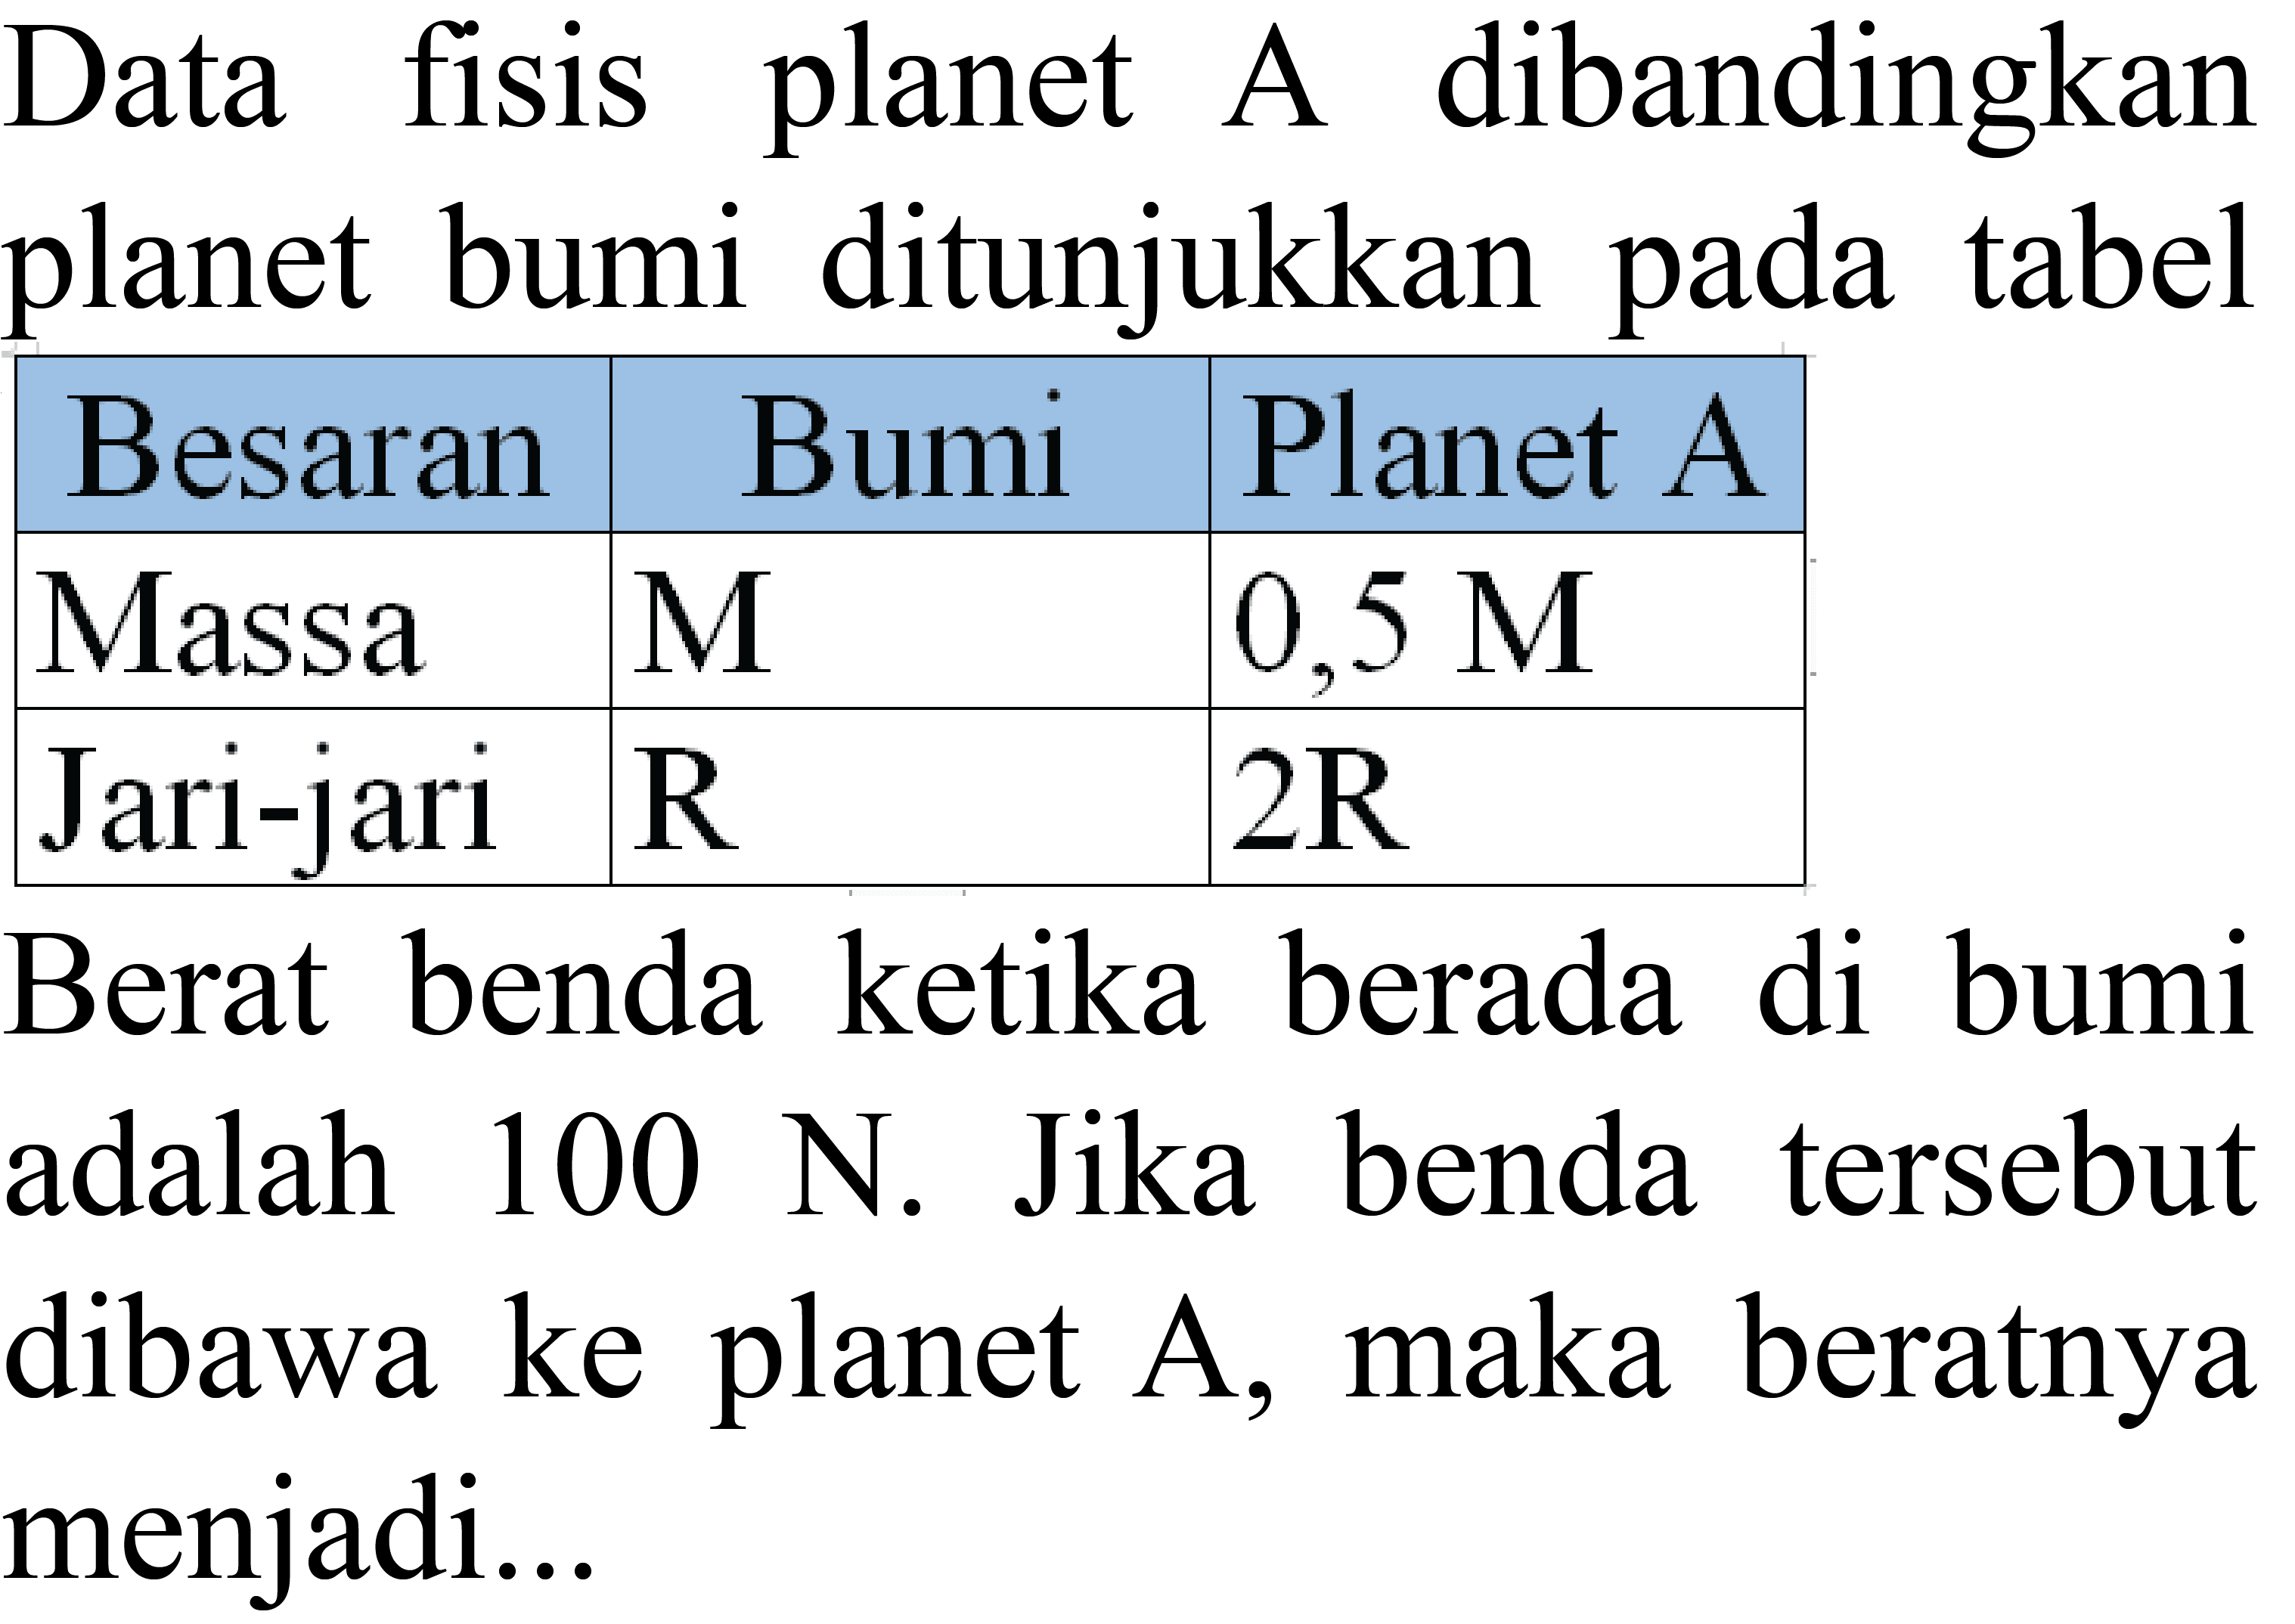 Data fisis planet A dibandingkan planet bumi ditunjukkan pada tabel
{|l|l|l|)
 Besaran  Bumi  Planet A 
 Massa   M    0,5 M  
 Jari-jari   R    2 R  


Berat benda ketika berada di bumi adalah  100 N . Jika benda tersebut dibawa ke planet  A , maka beratnya menjadi...